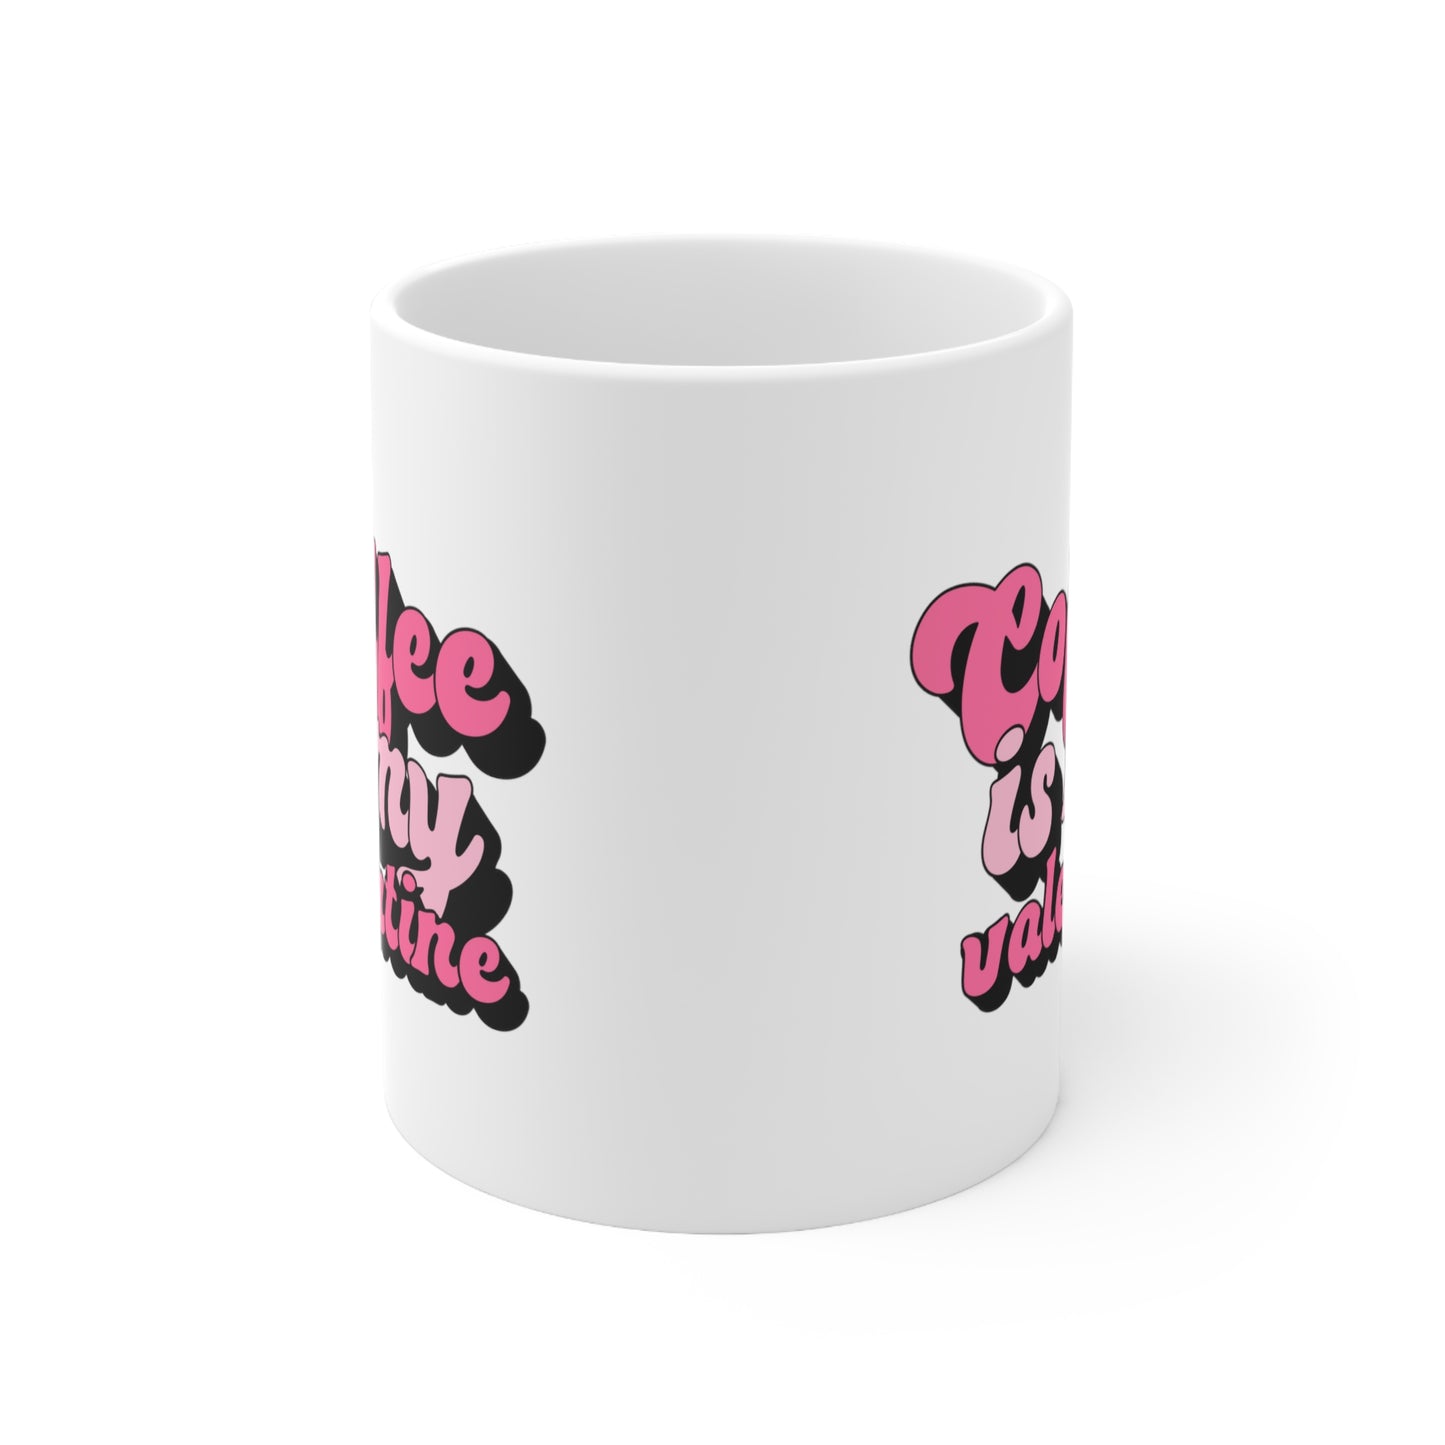 Retro Coffee Is My Valentine Ceramic Mug 11oz